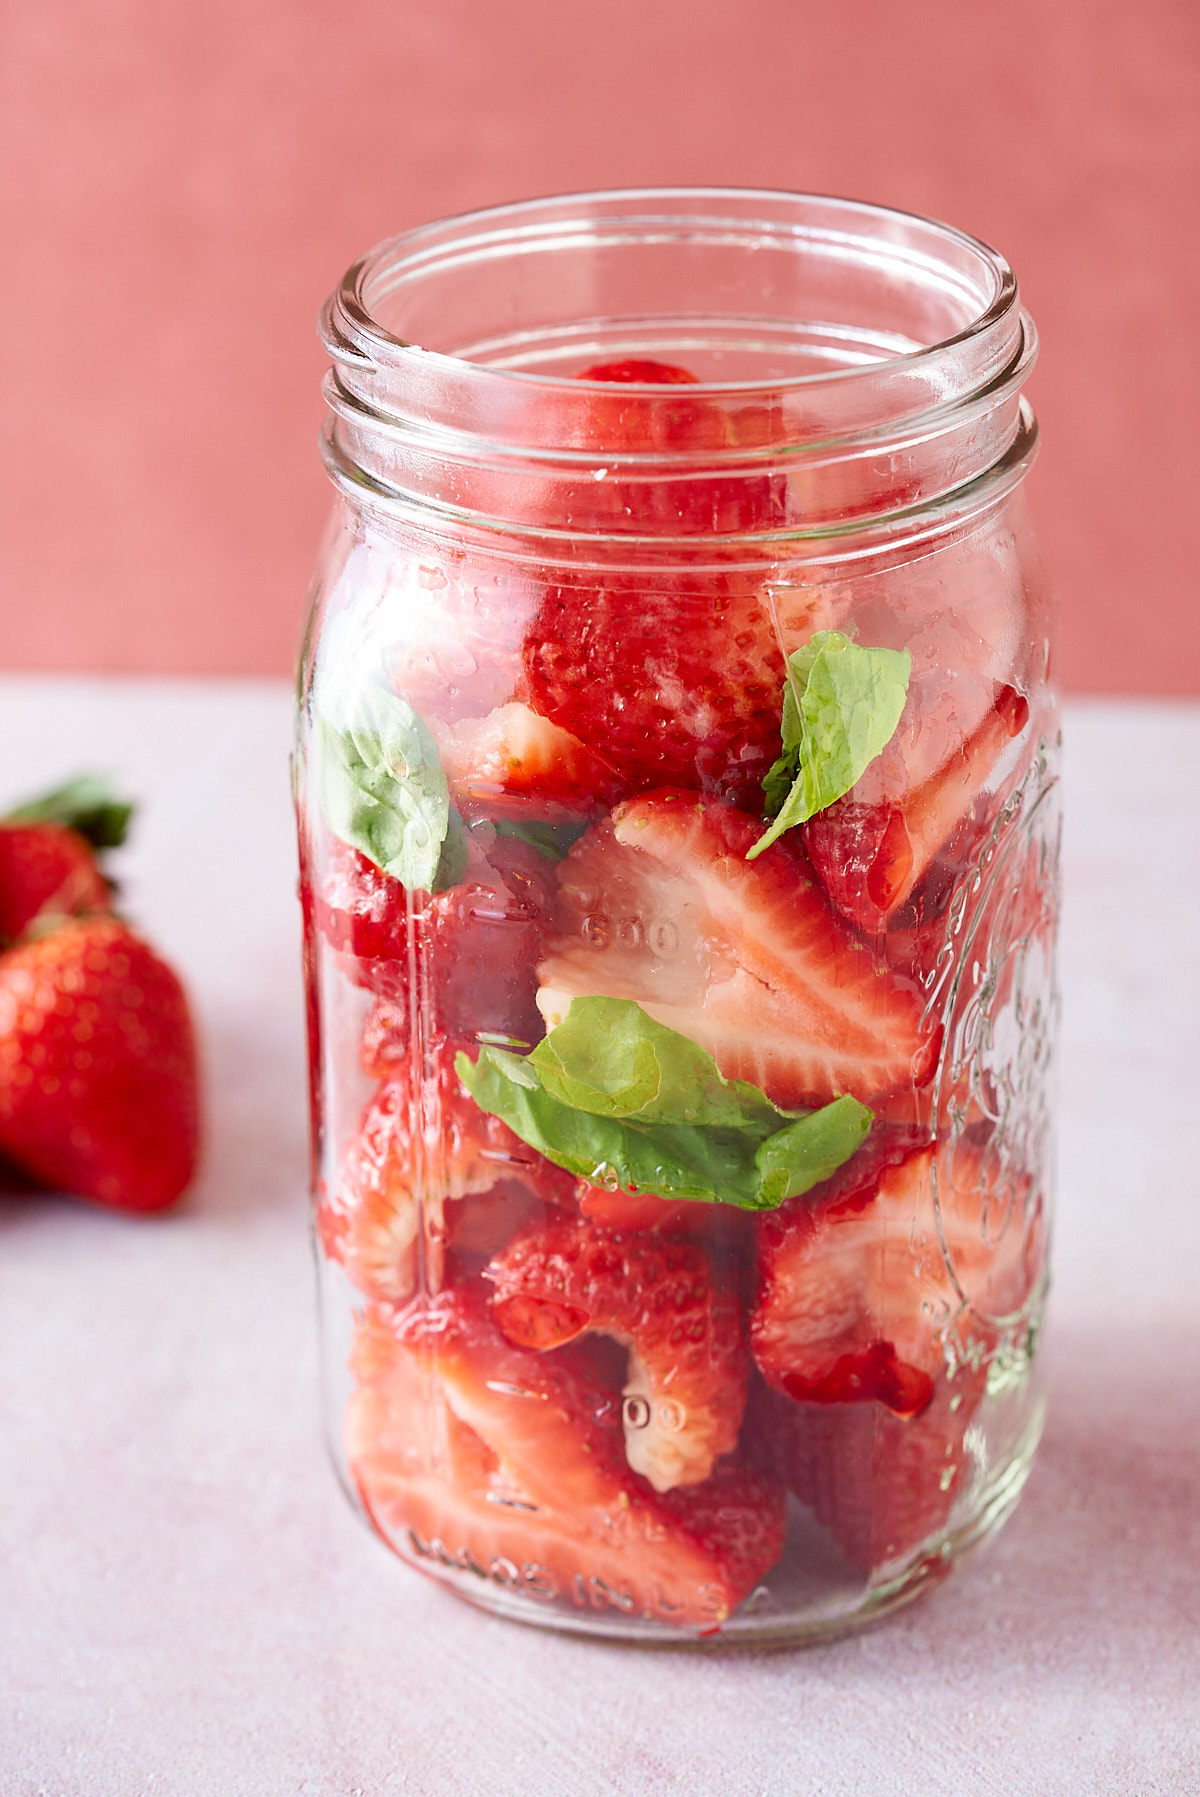 Strawberries added to the mason jar.